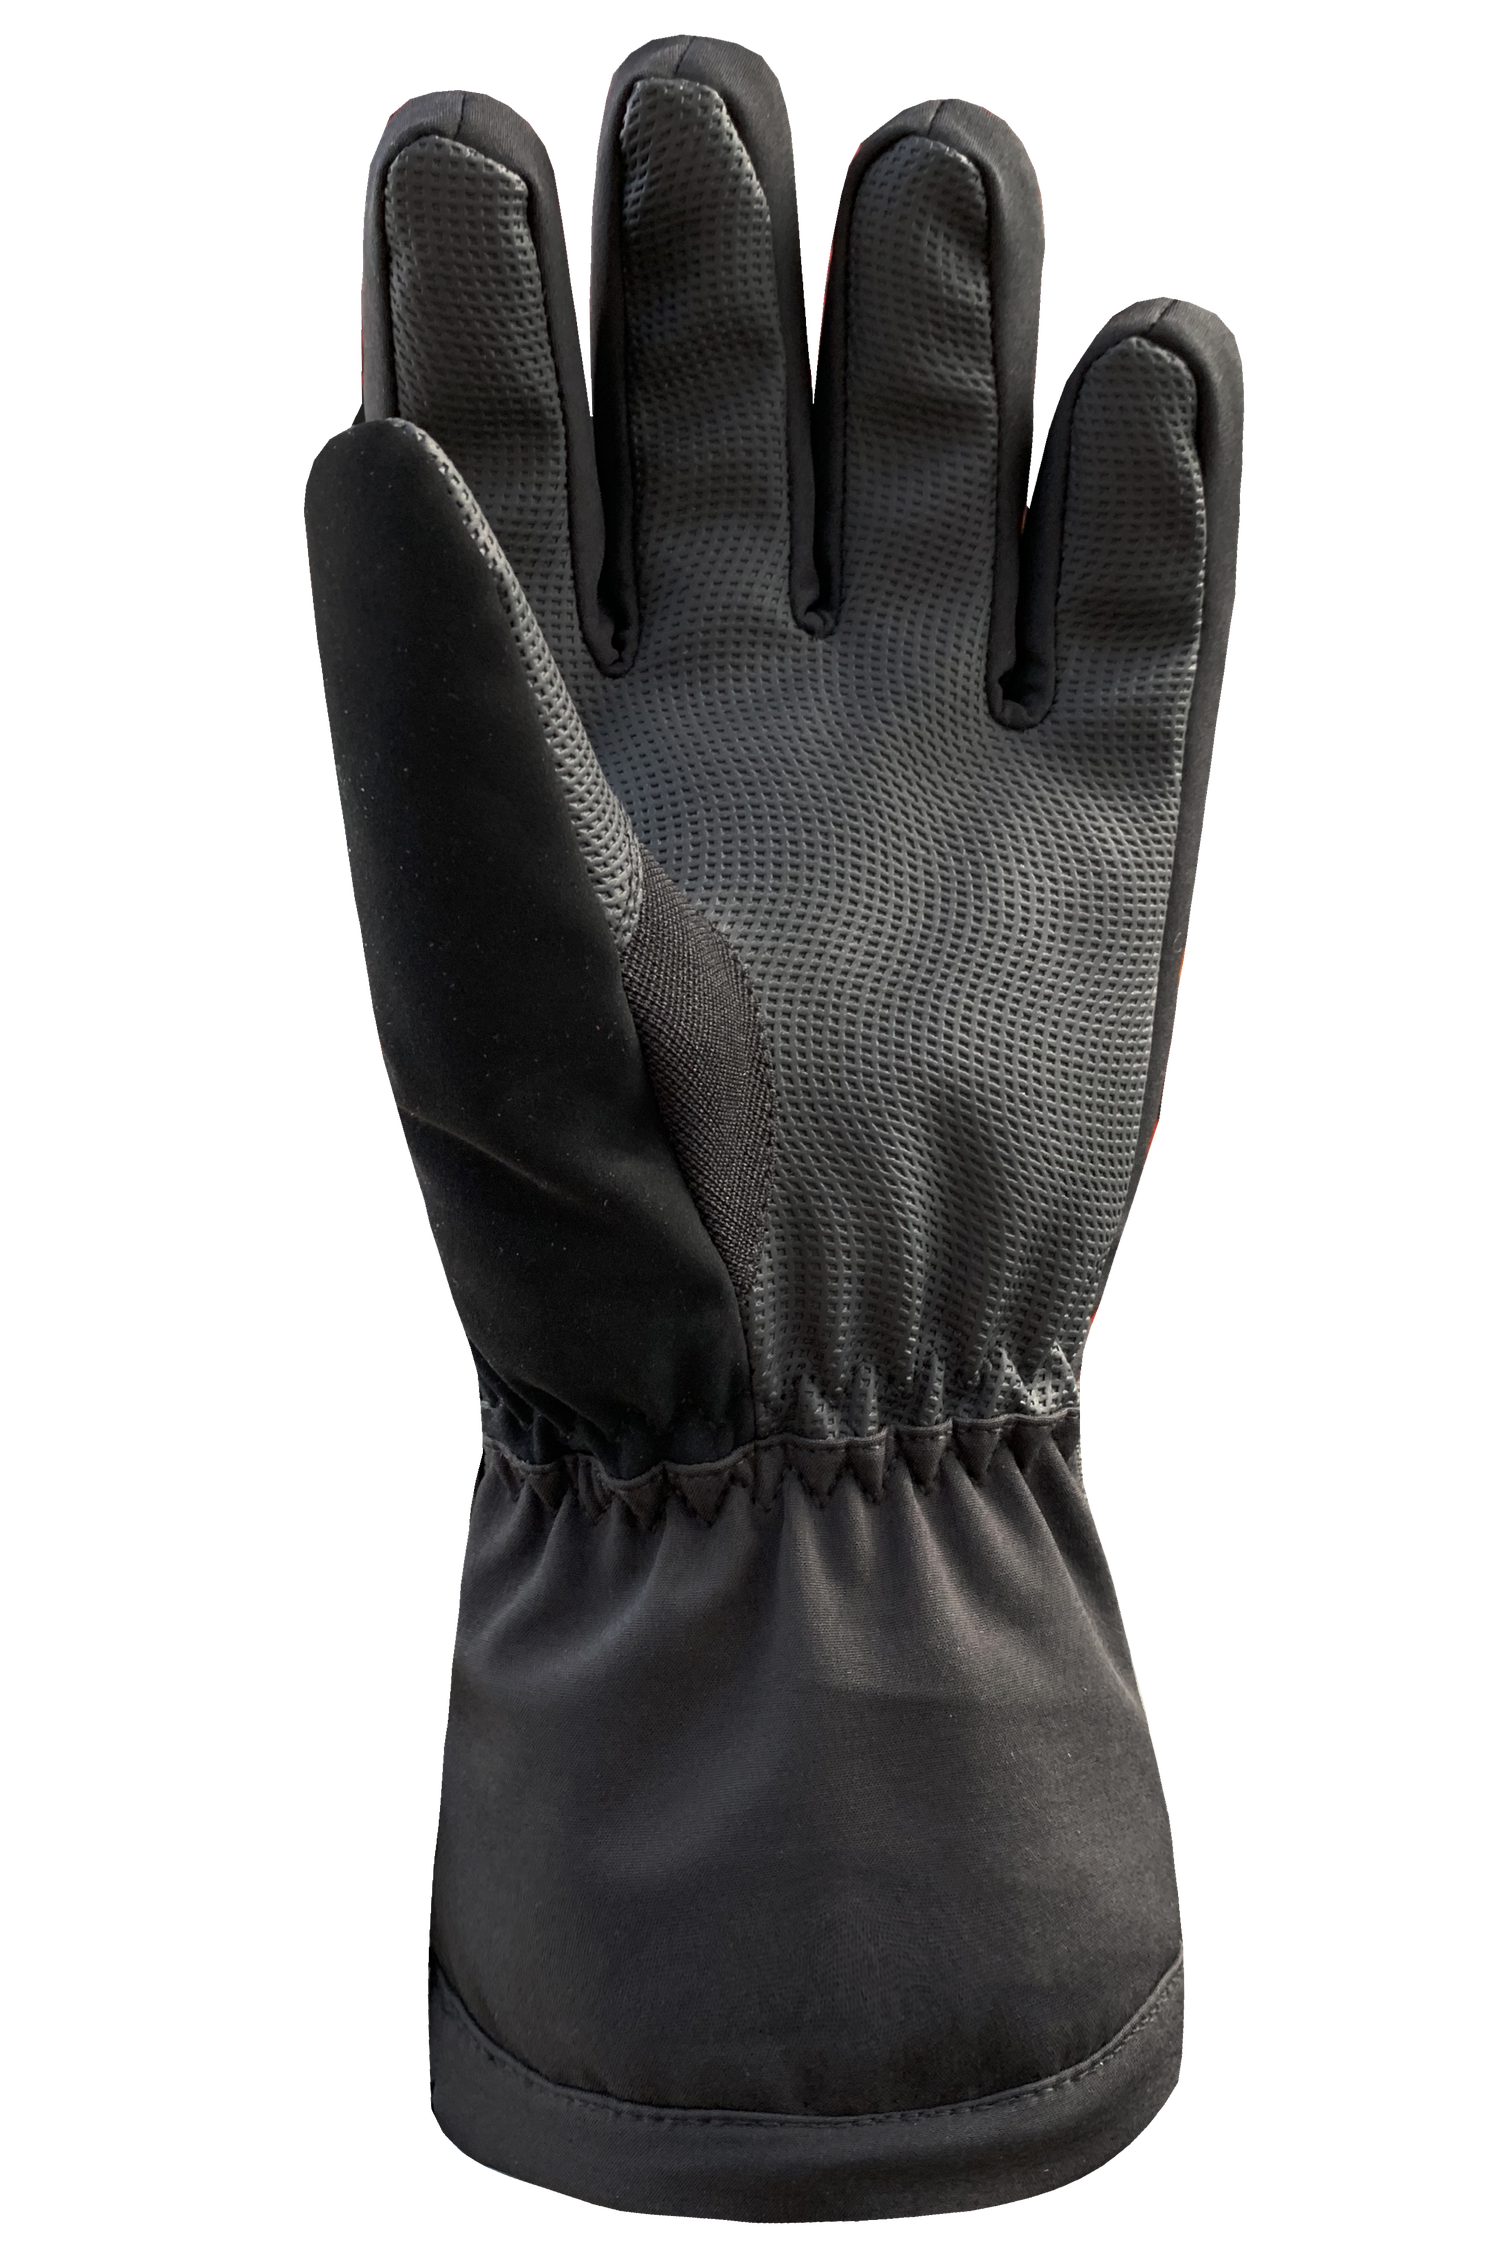 Softee 3 Gloves - Women, Black